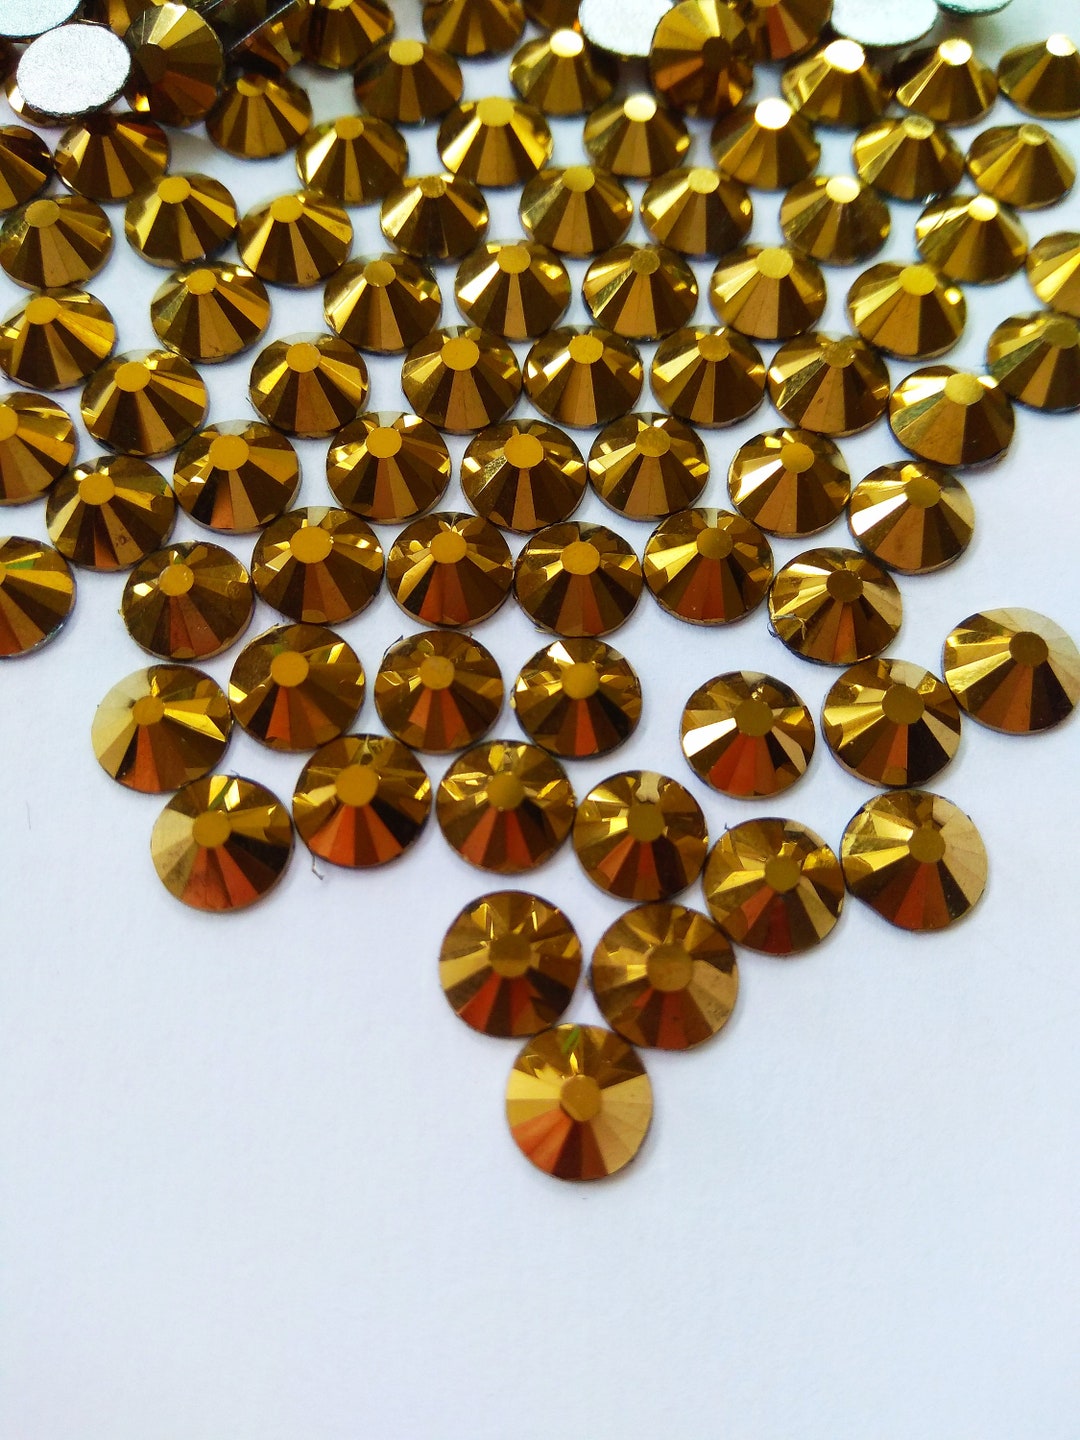 Topaz / Topaz AB Flat Back Rhinestones Crystals Light Orange golden Yellow  AB Aurora Borealis Glass Beads 2mm3mm4mm5mm6mm Mixed Sizes 